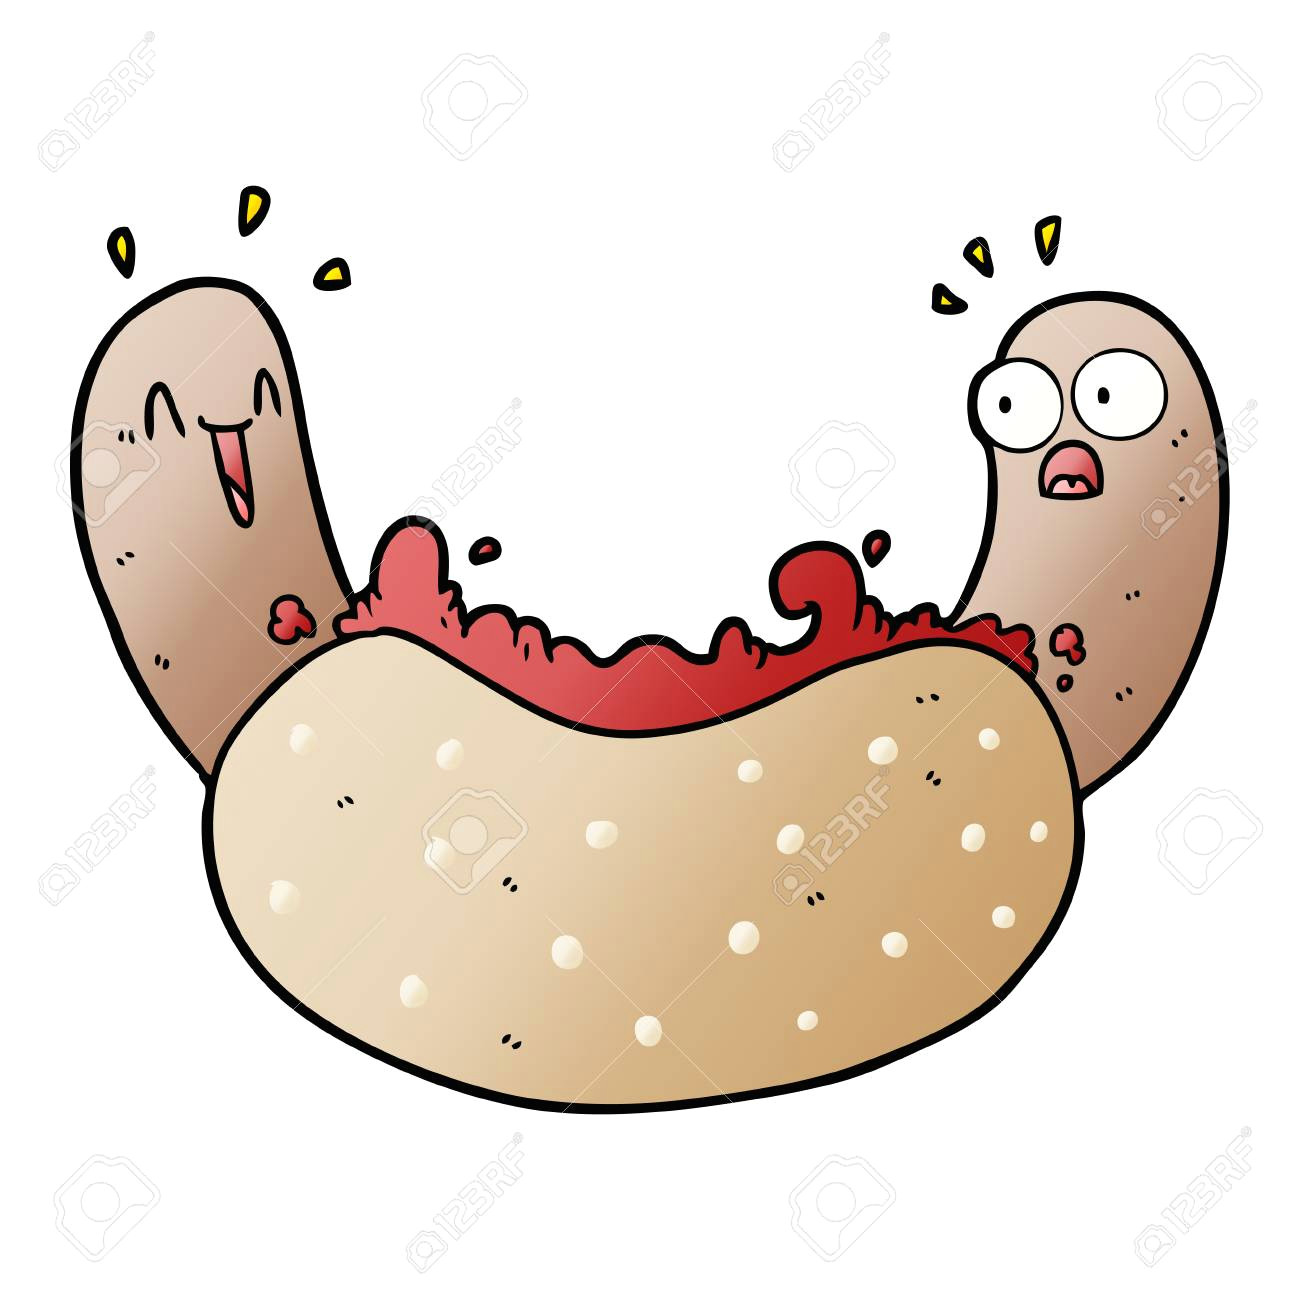 Cartoon Drawing Of A Hot Dog Cartoon Hotdog Illustration Design Royalty Free Cliparts Vectors